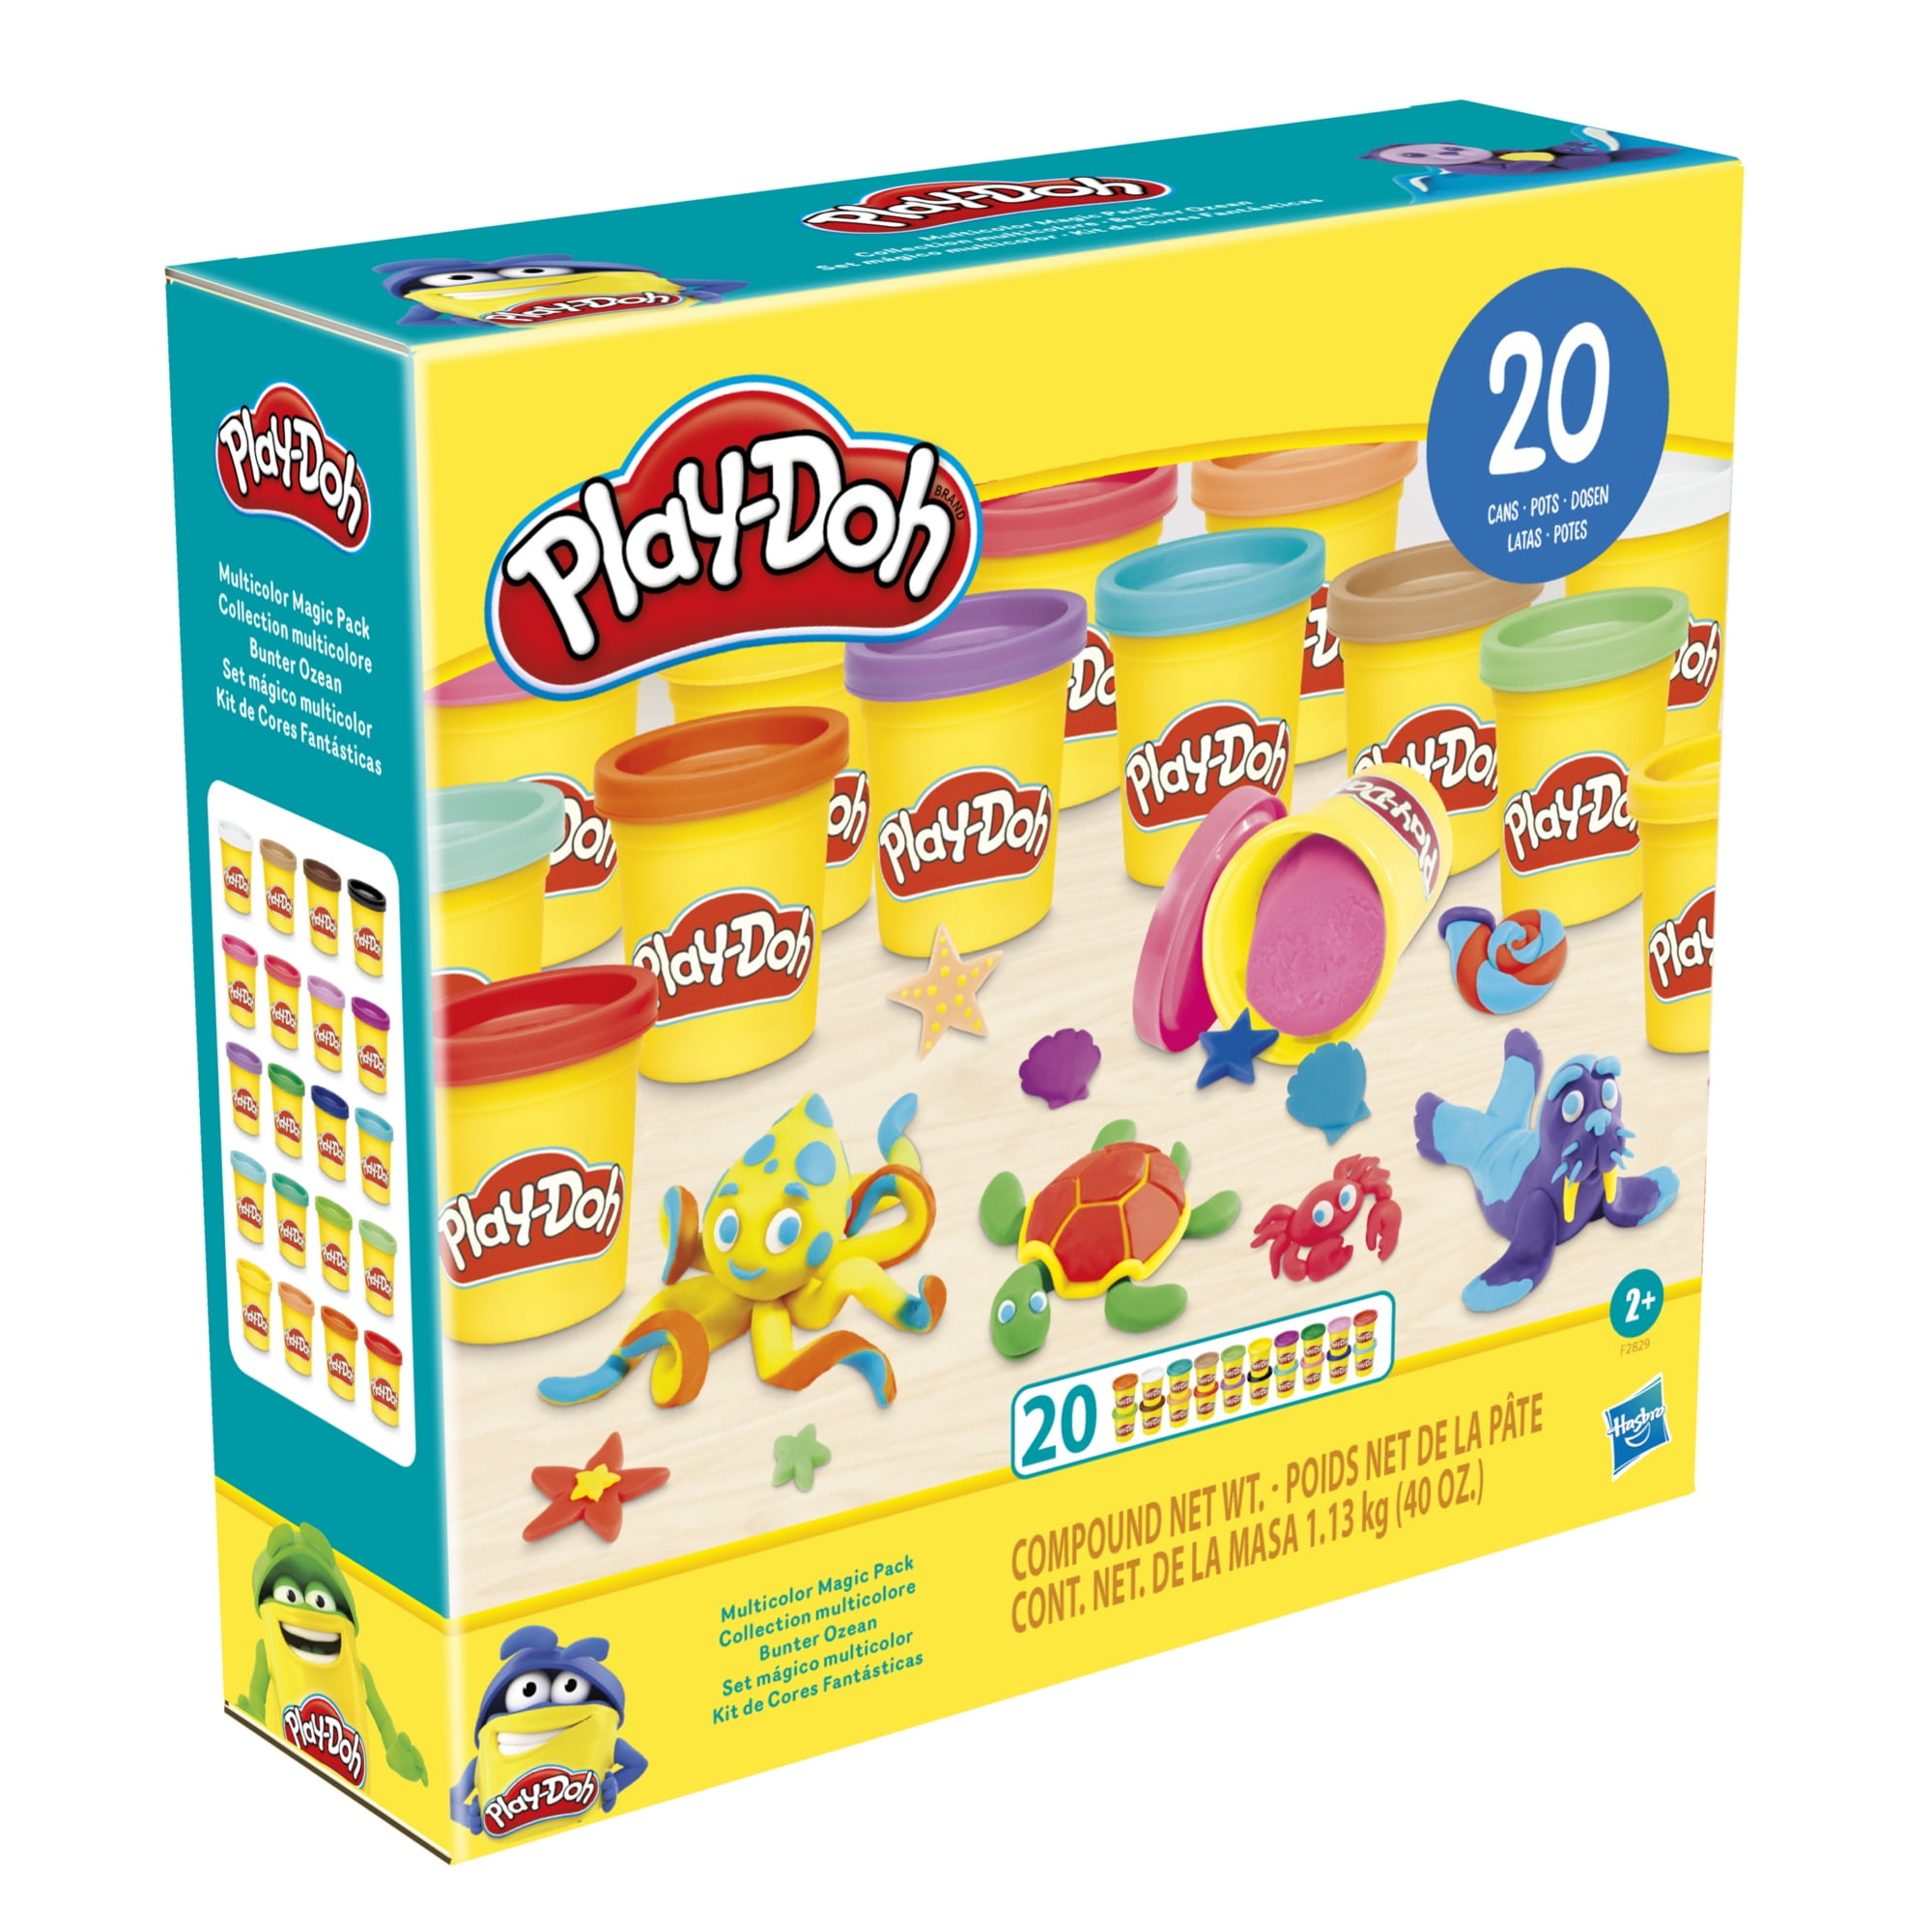 Play-Doh Multicolor Magic Pack - Multicolor (20 Count)